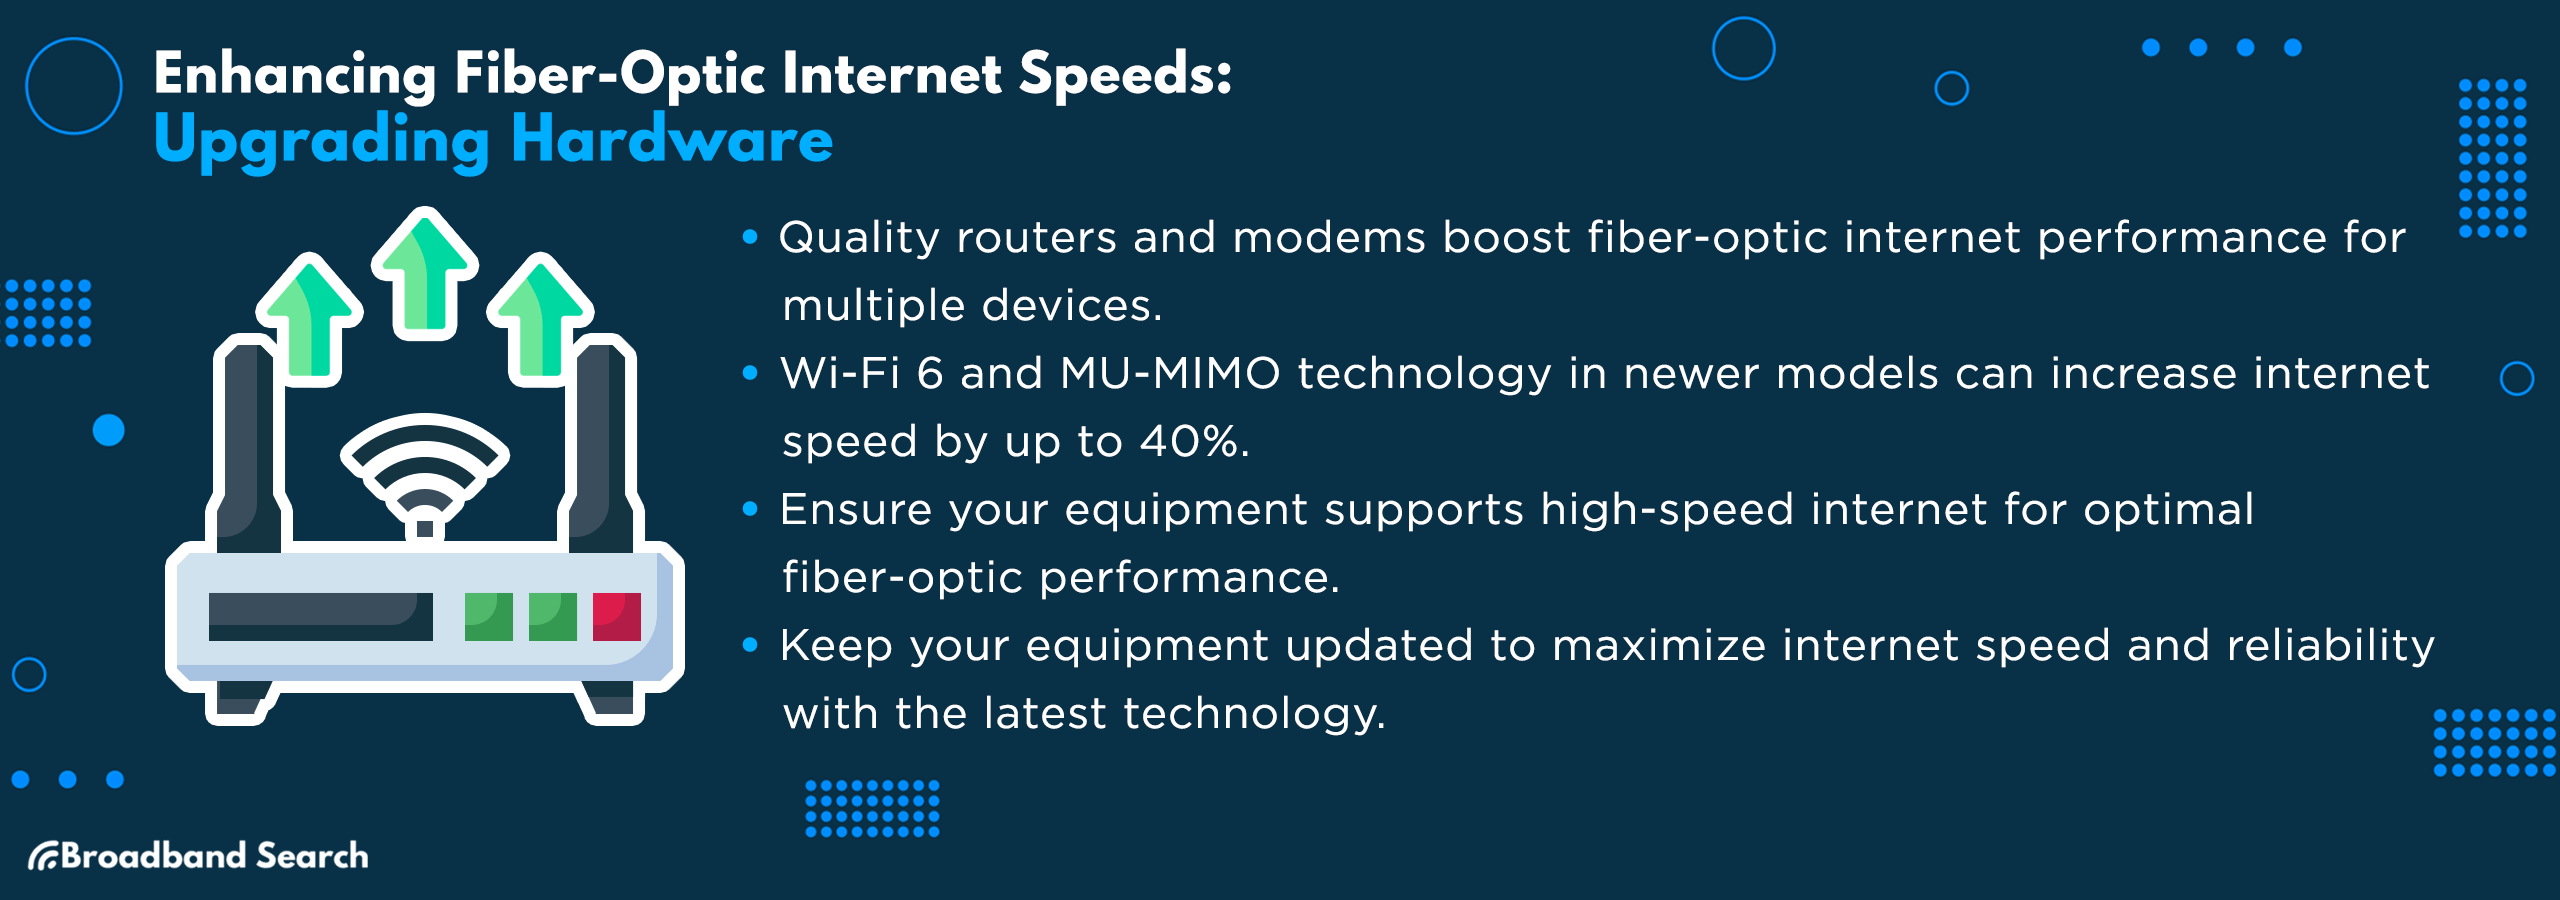 Tips on enhancing fiber-optic speeds: upgrading hardware